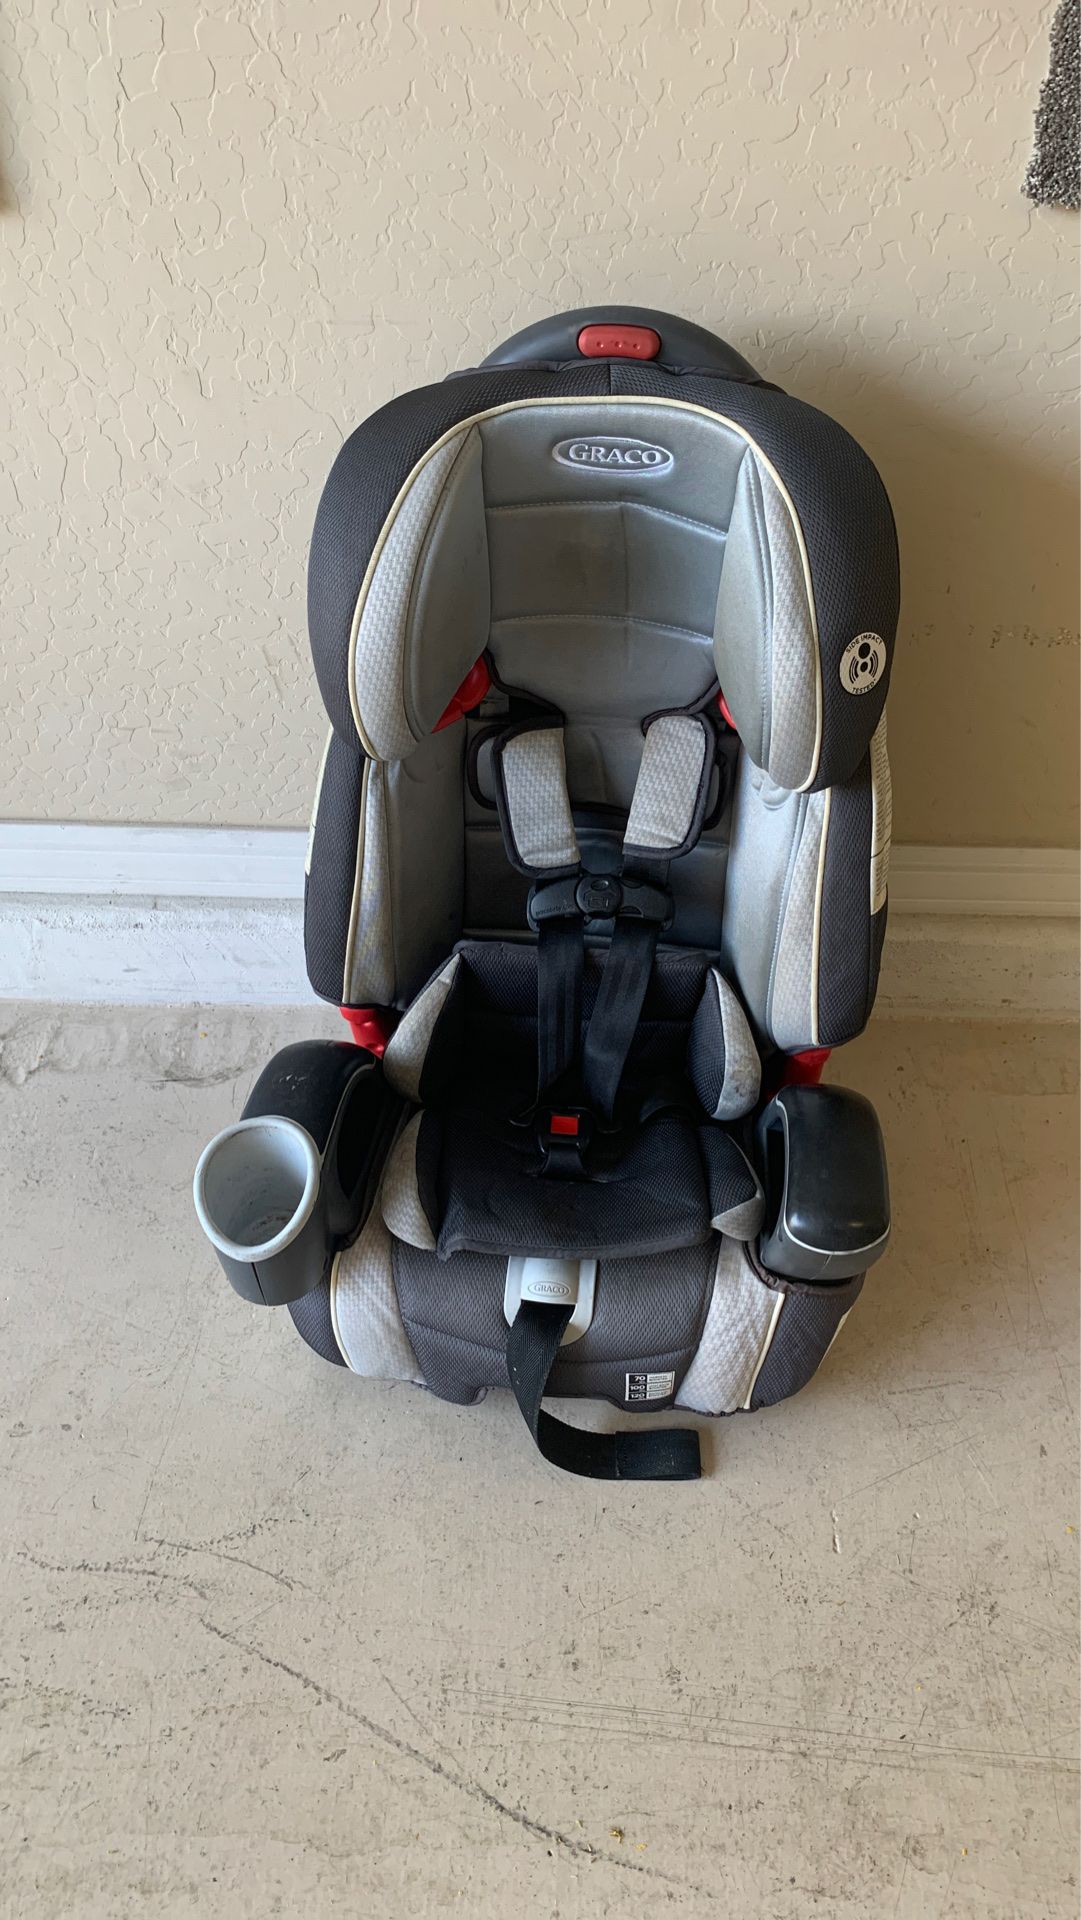 Graco convertible car seat baby seat